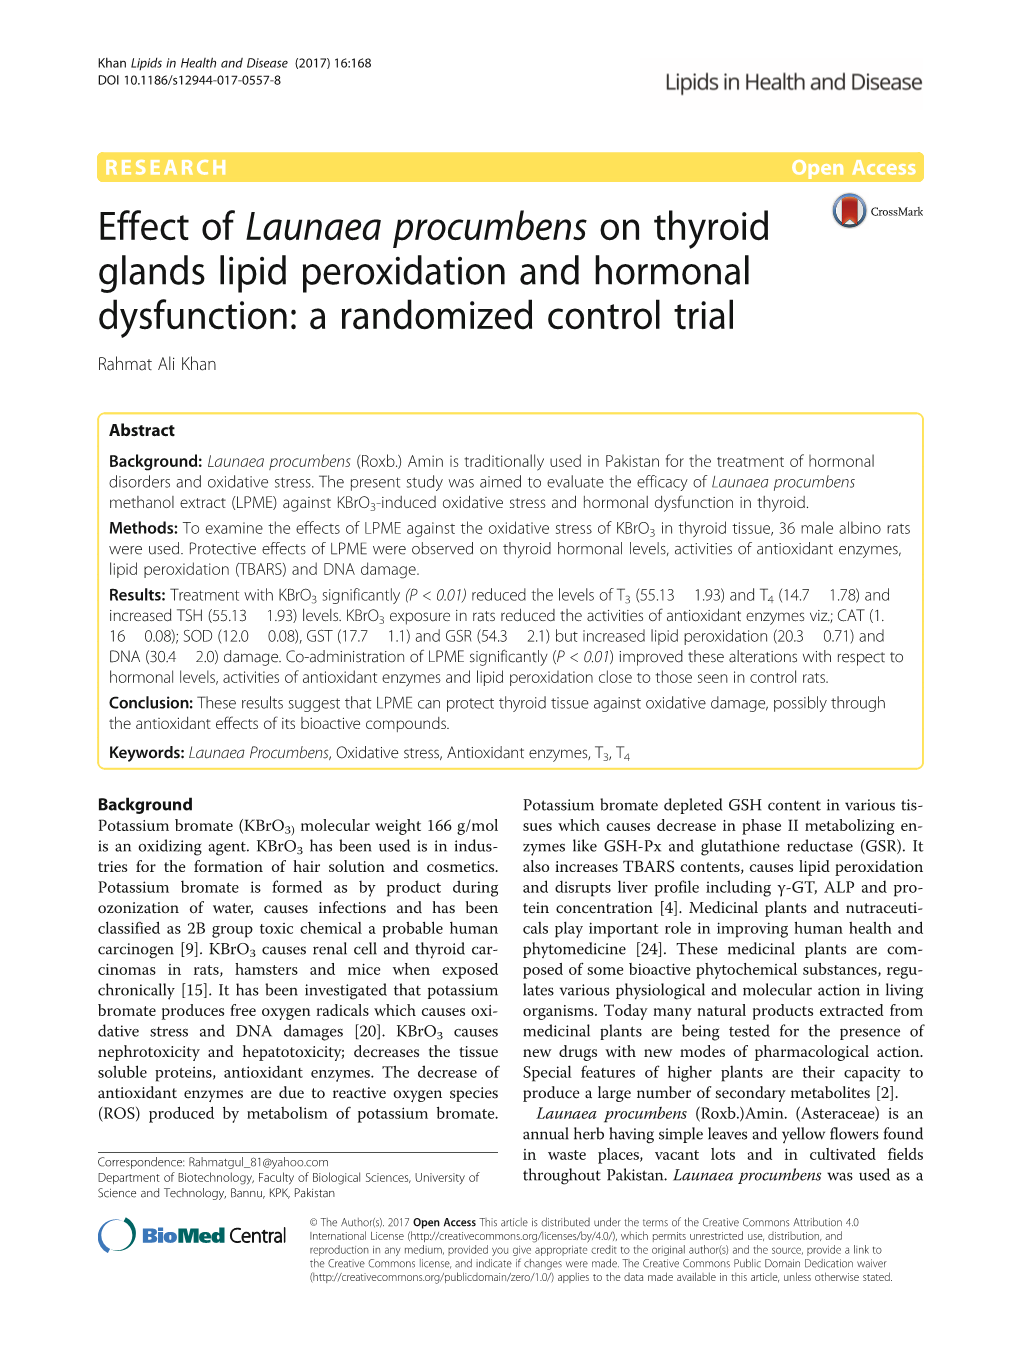 Effect of Launaea Procumbens on Thyroid Glands Lipid Peroxidation and Hormonal Dysfunction: a Randomized Control Trial Rahmat Ali Khan